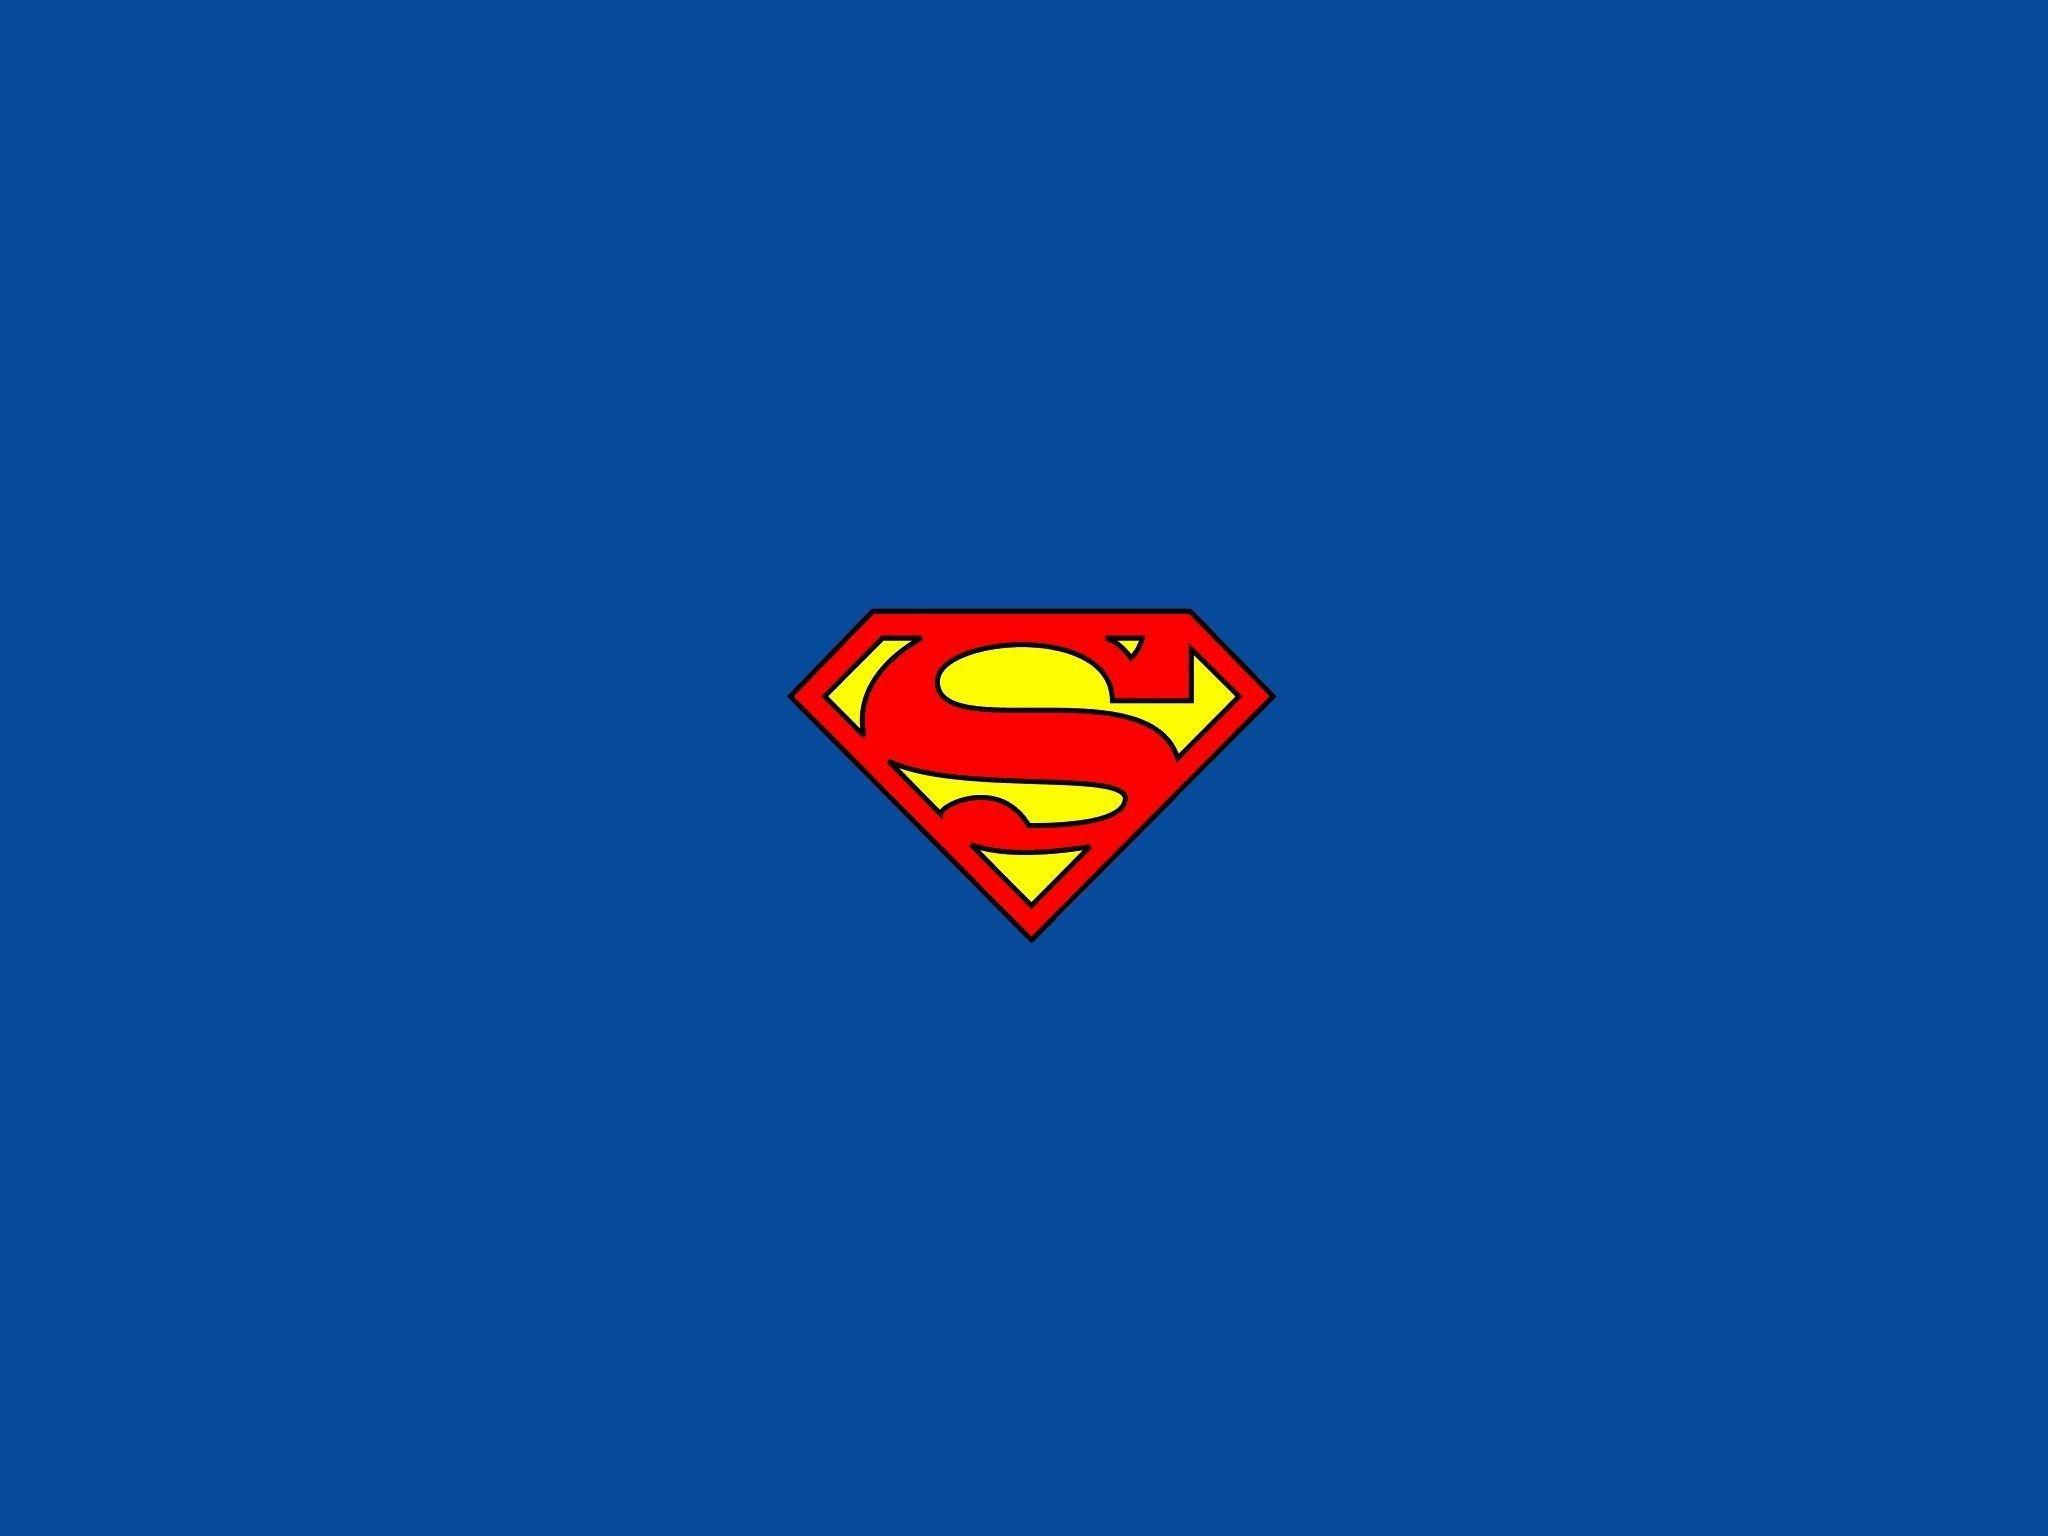 Wallpaper Logo - Superman Logo wallpaper ·① Download free amazing High Resolution ...